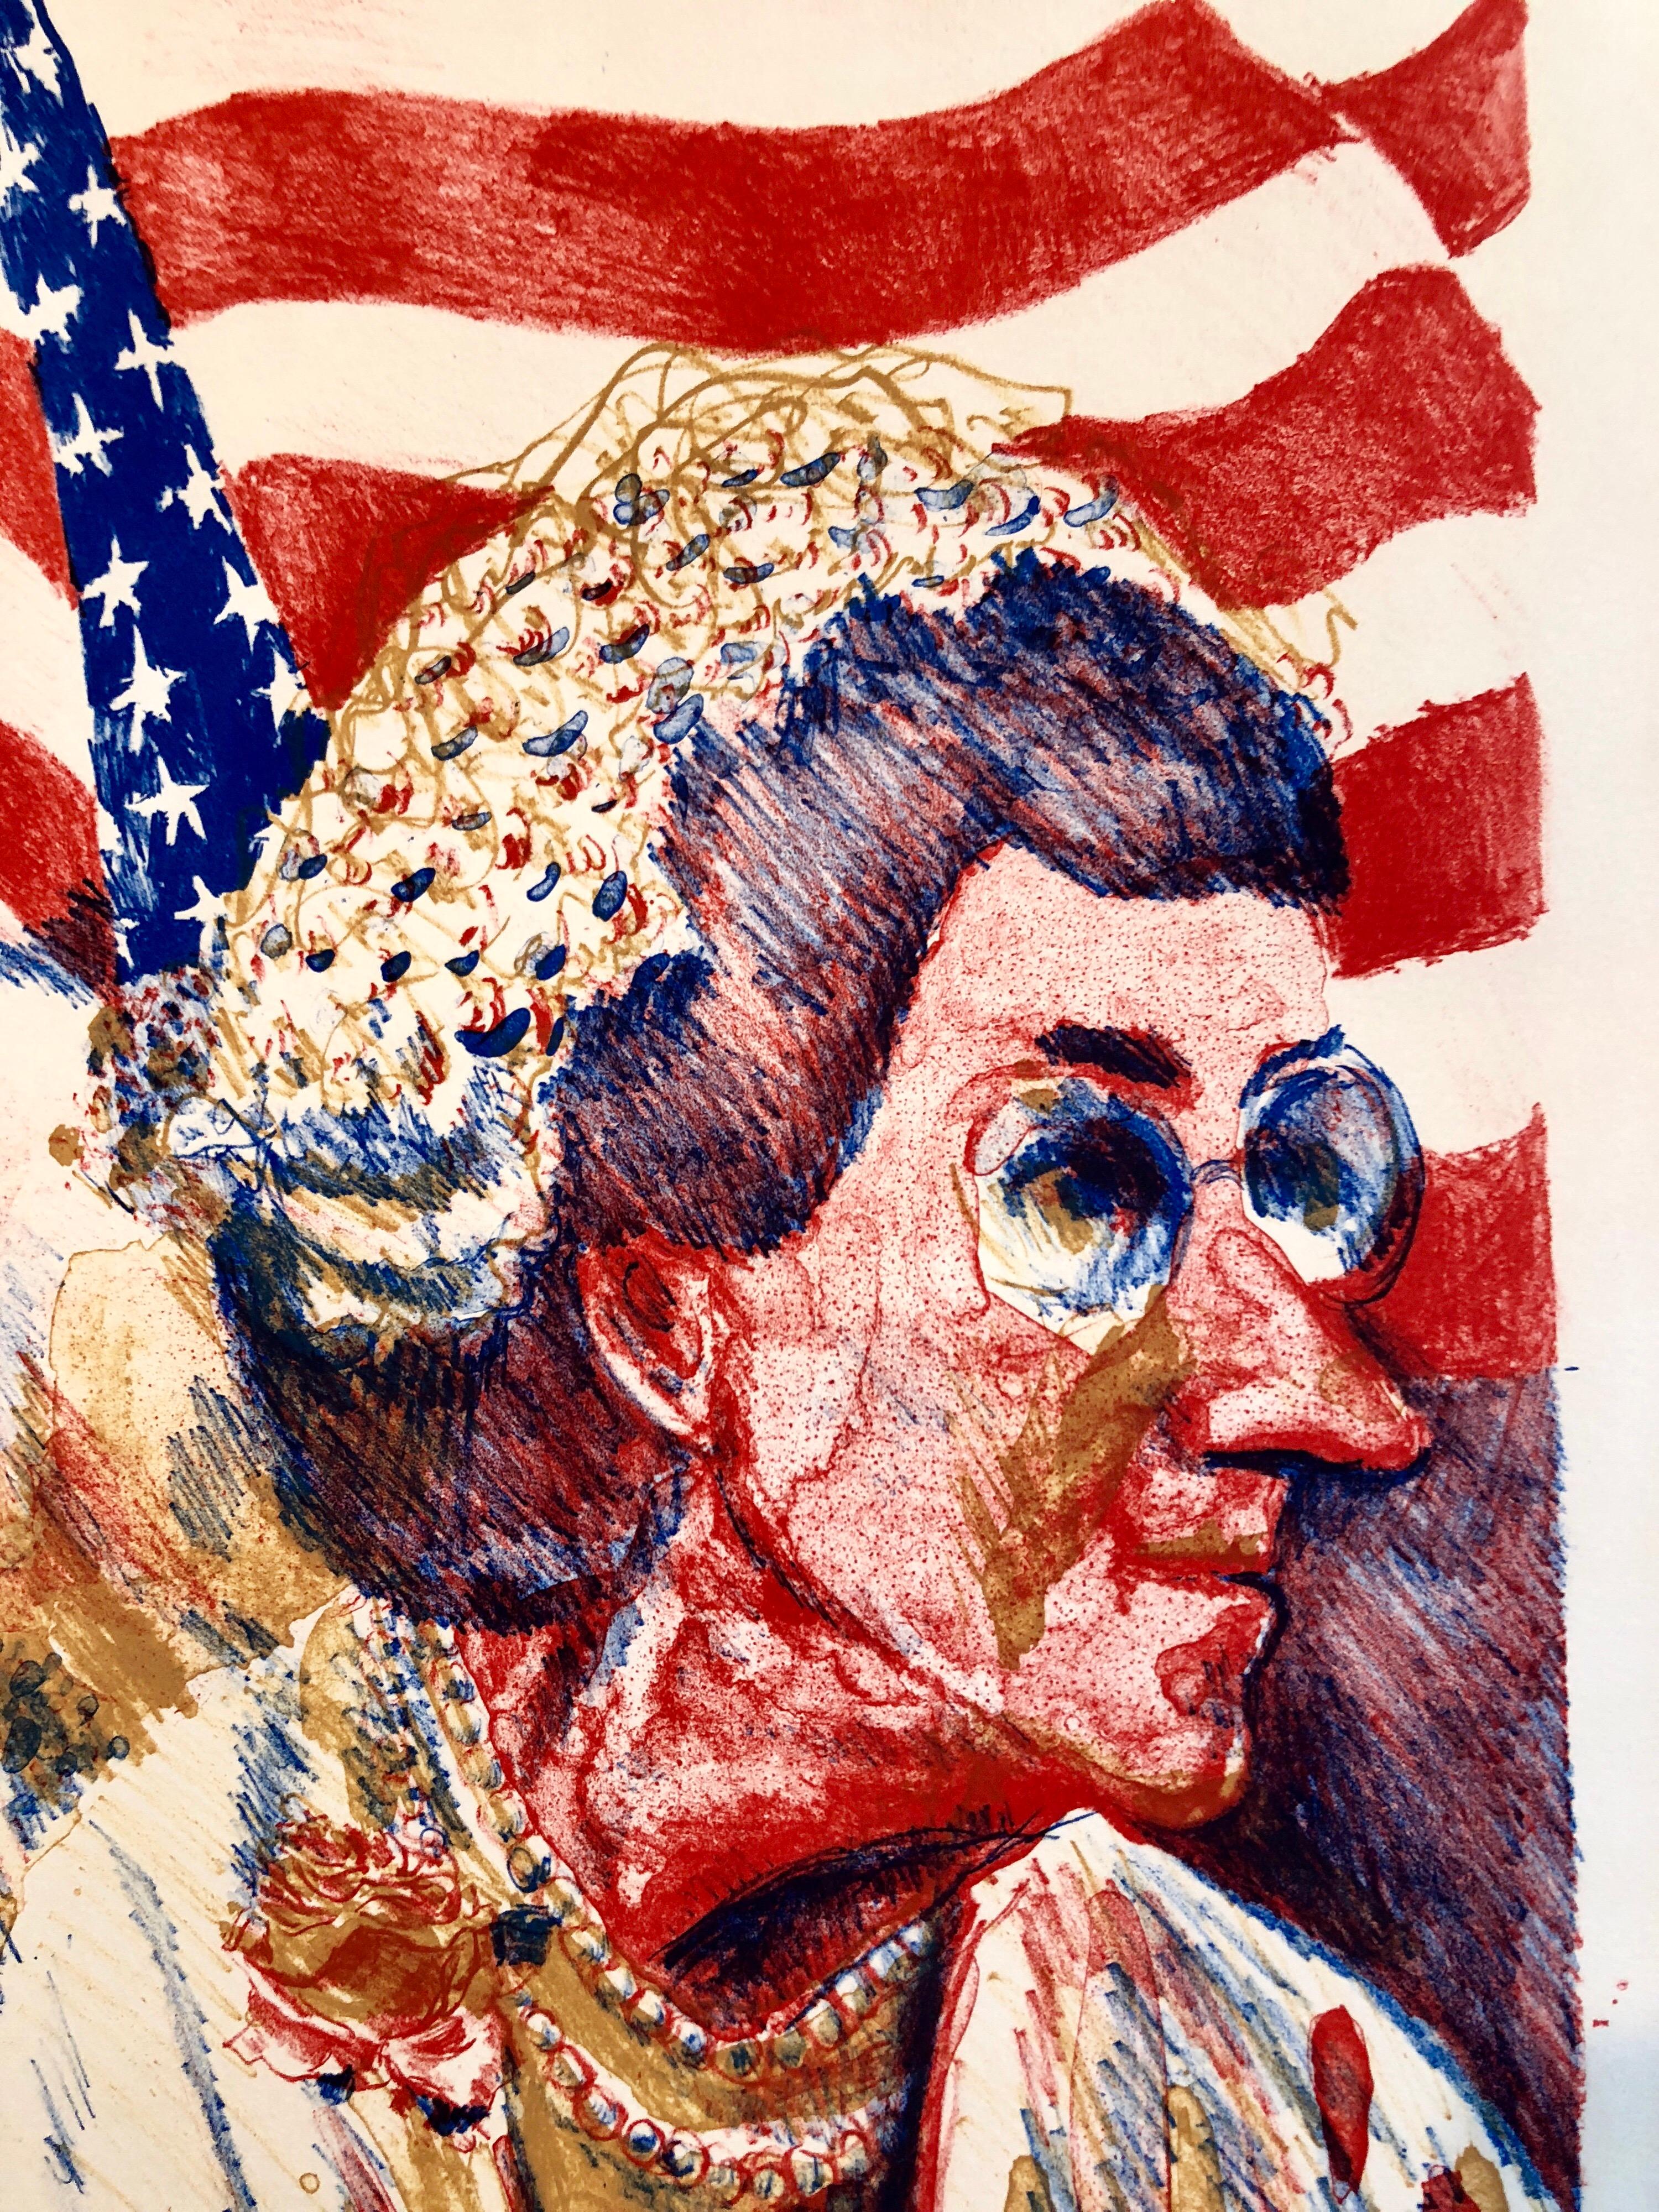 Ohio Art Modern Americana Patriotic Lithograph American Flag Attentive Patriots - Print by Sid Chafetz